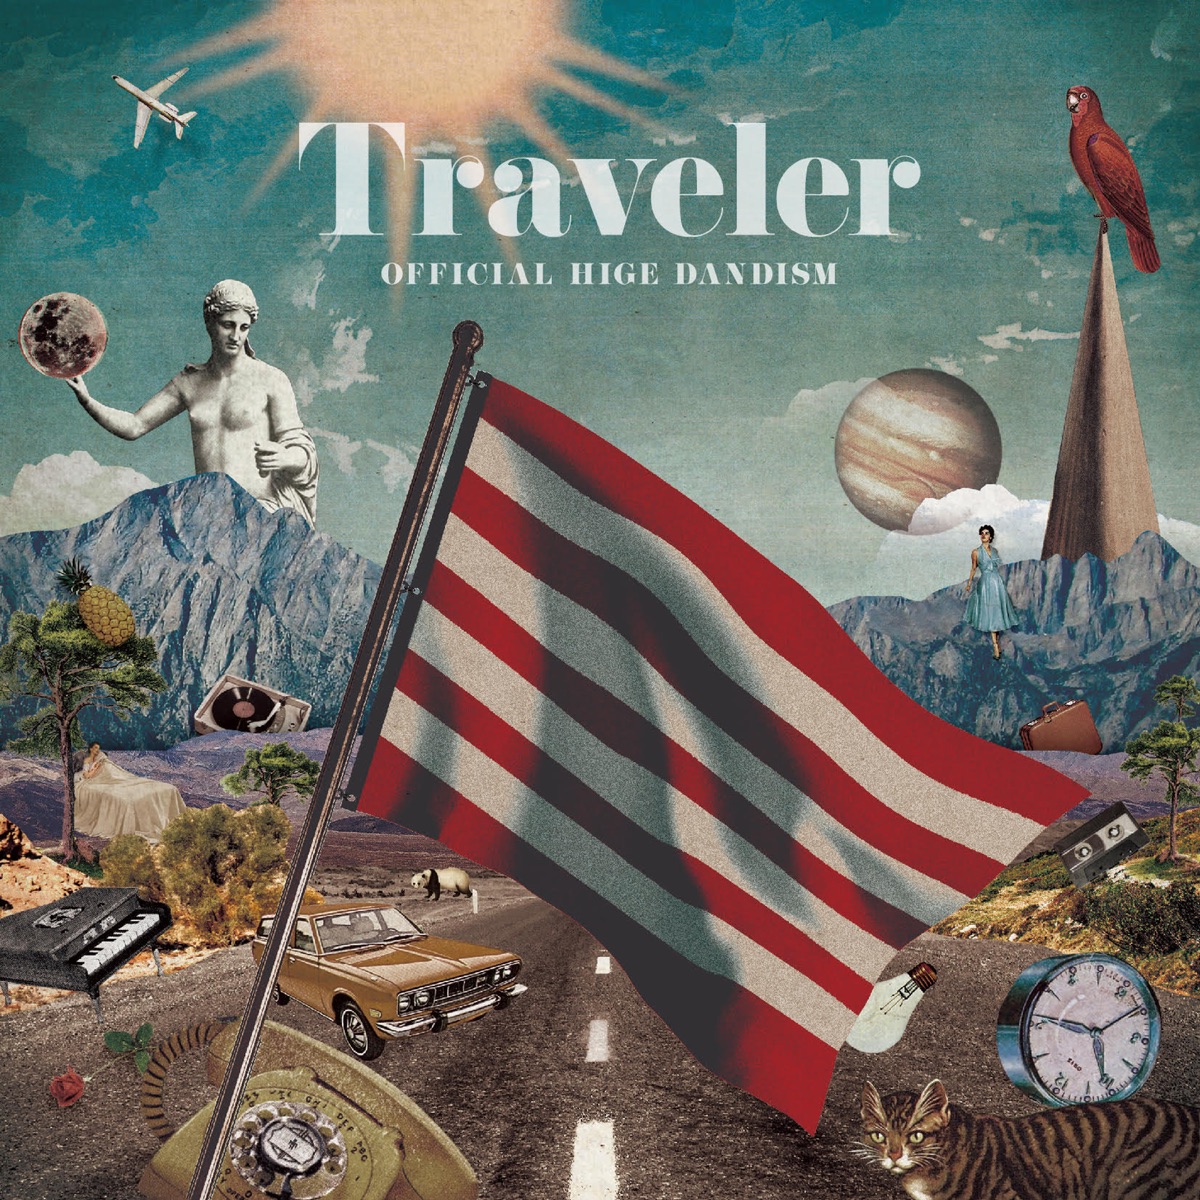 『Official髭男dism - Travelers 歌詞』収録の『Traveler』ジャケット